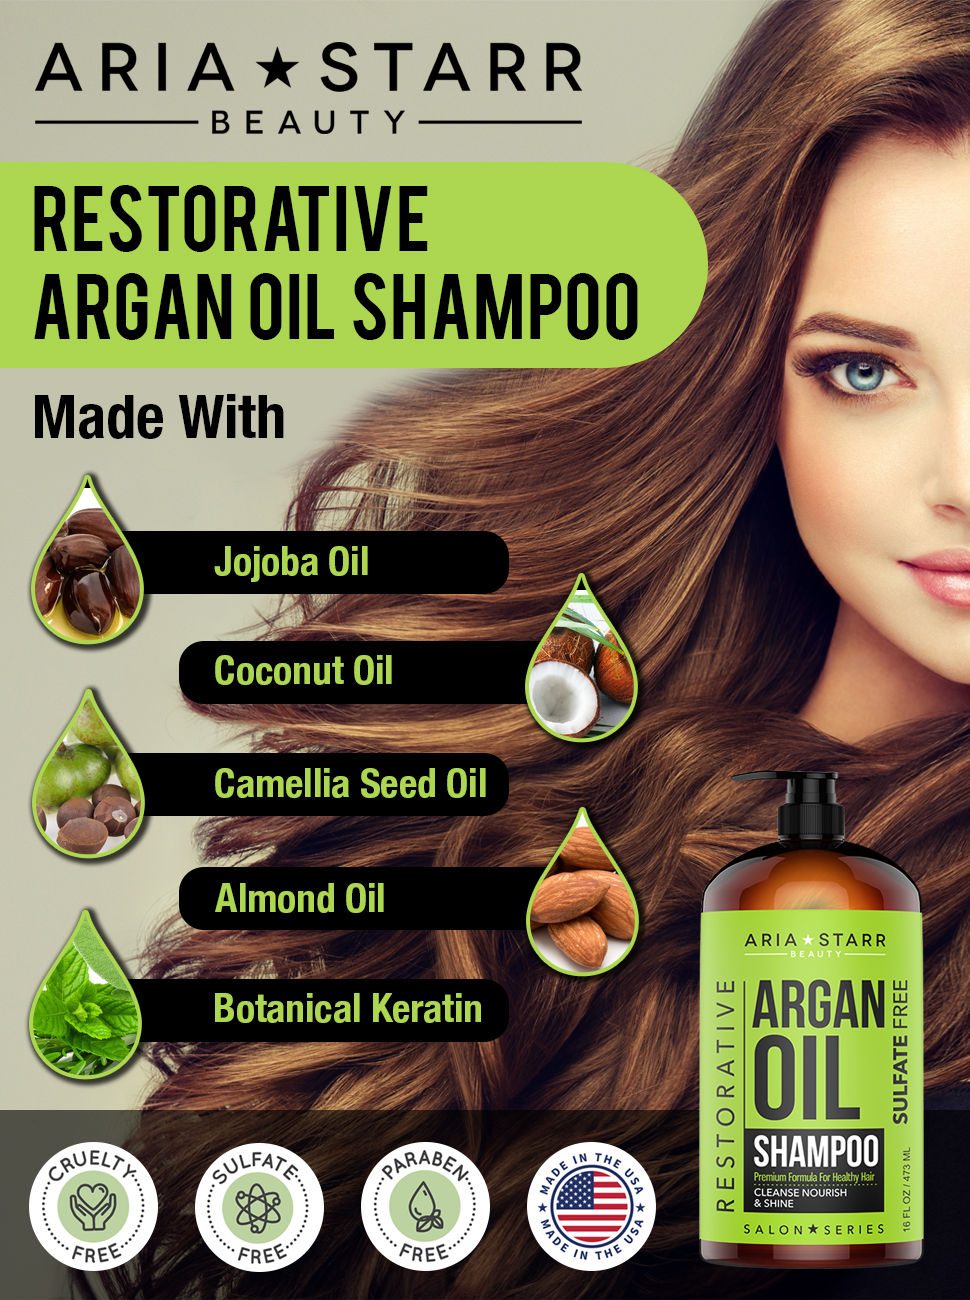 Aria Starr Restorative Argan Oil Shampoo